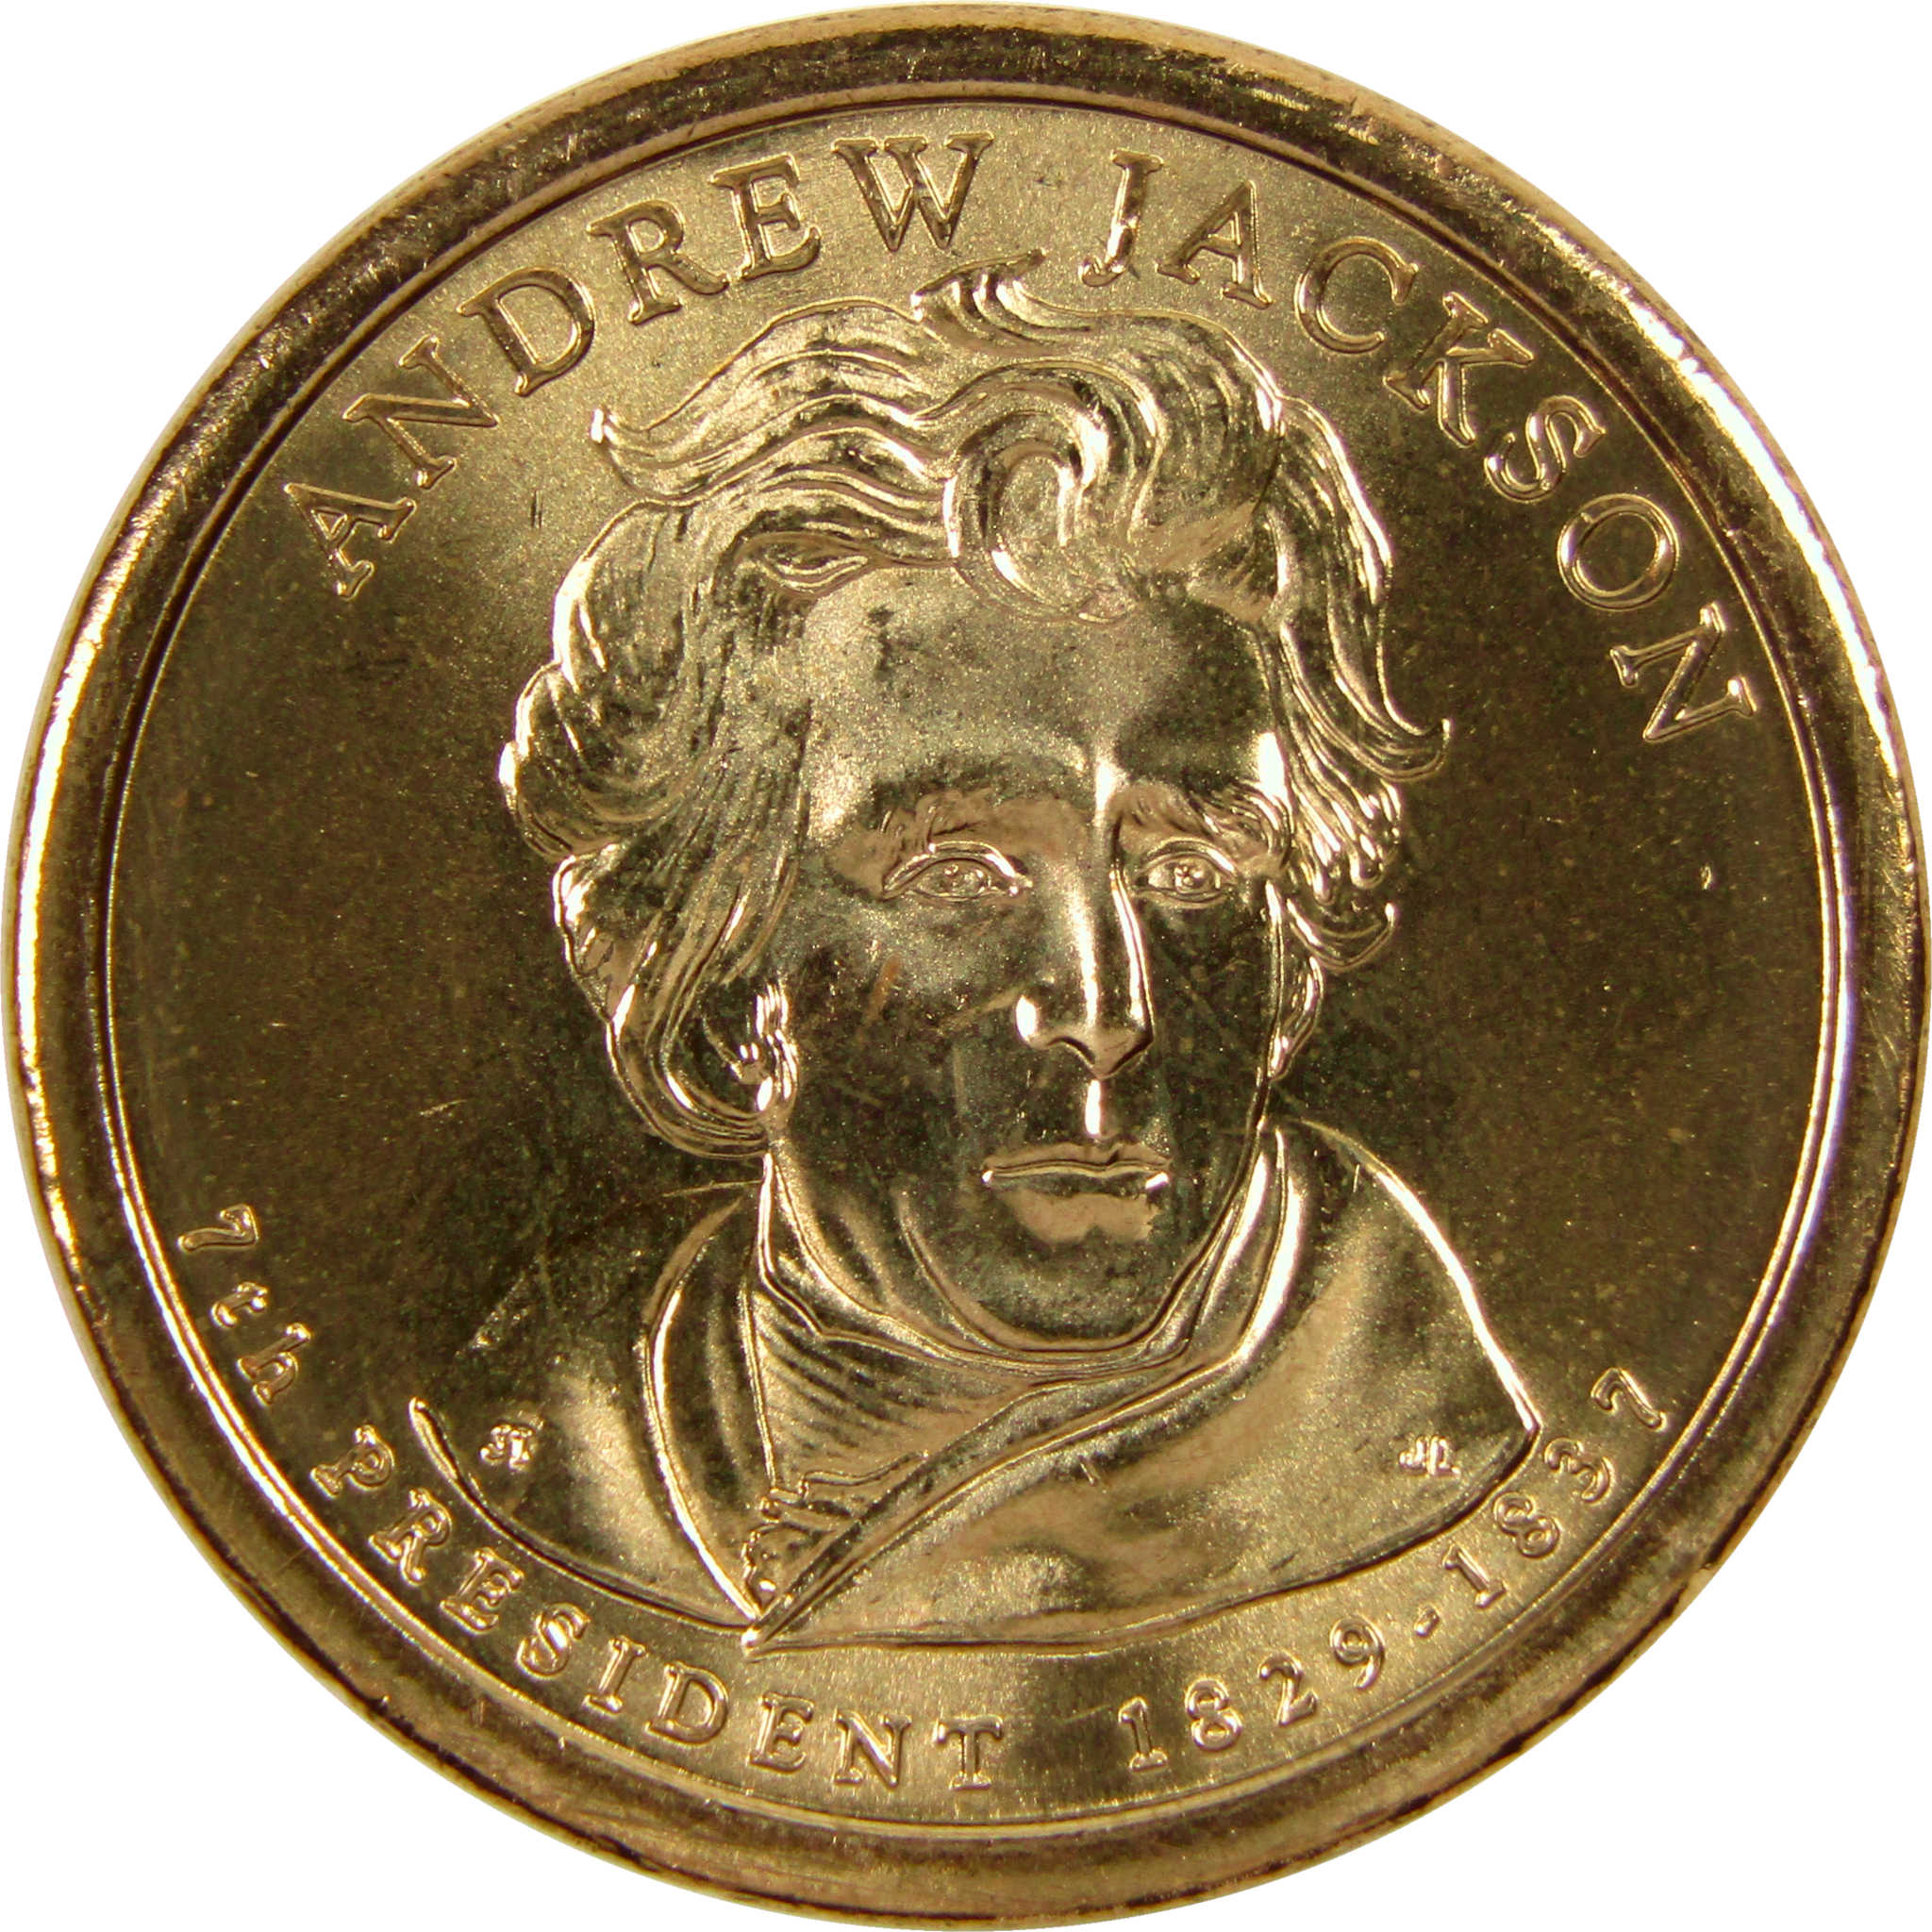 2008 P Andrew Jackson Presidential Dollar BU Uncirculated $1 Coin